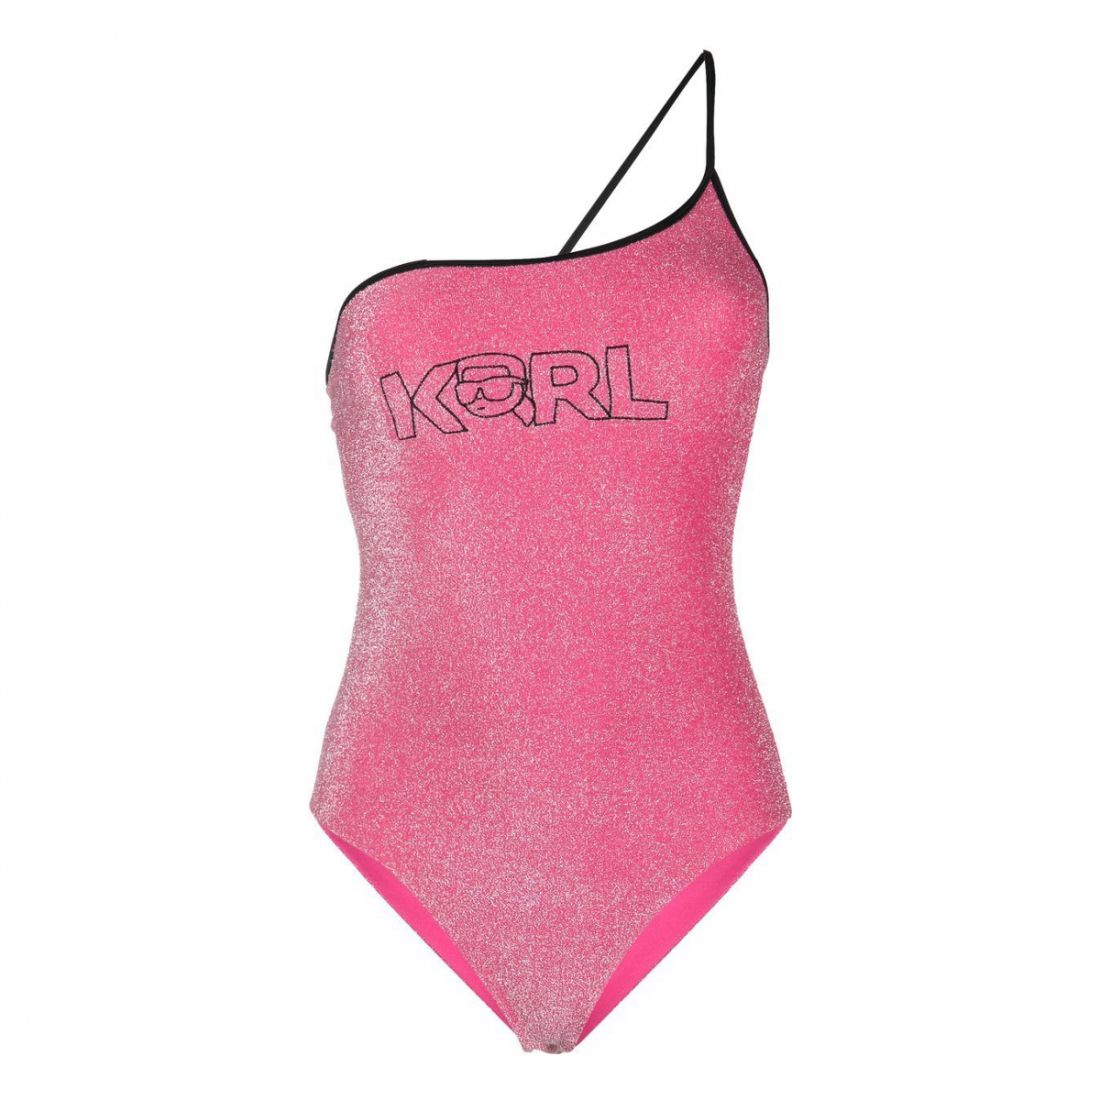 Karl Lagerfeld - Maillot de bain 'Ikonik 2.0 Lurex' pour Femmes